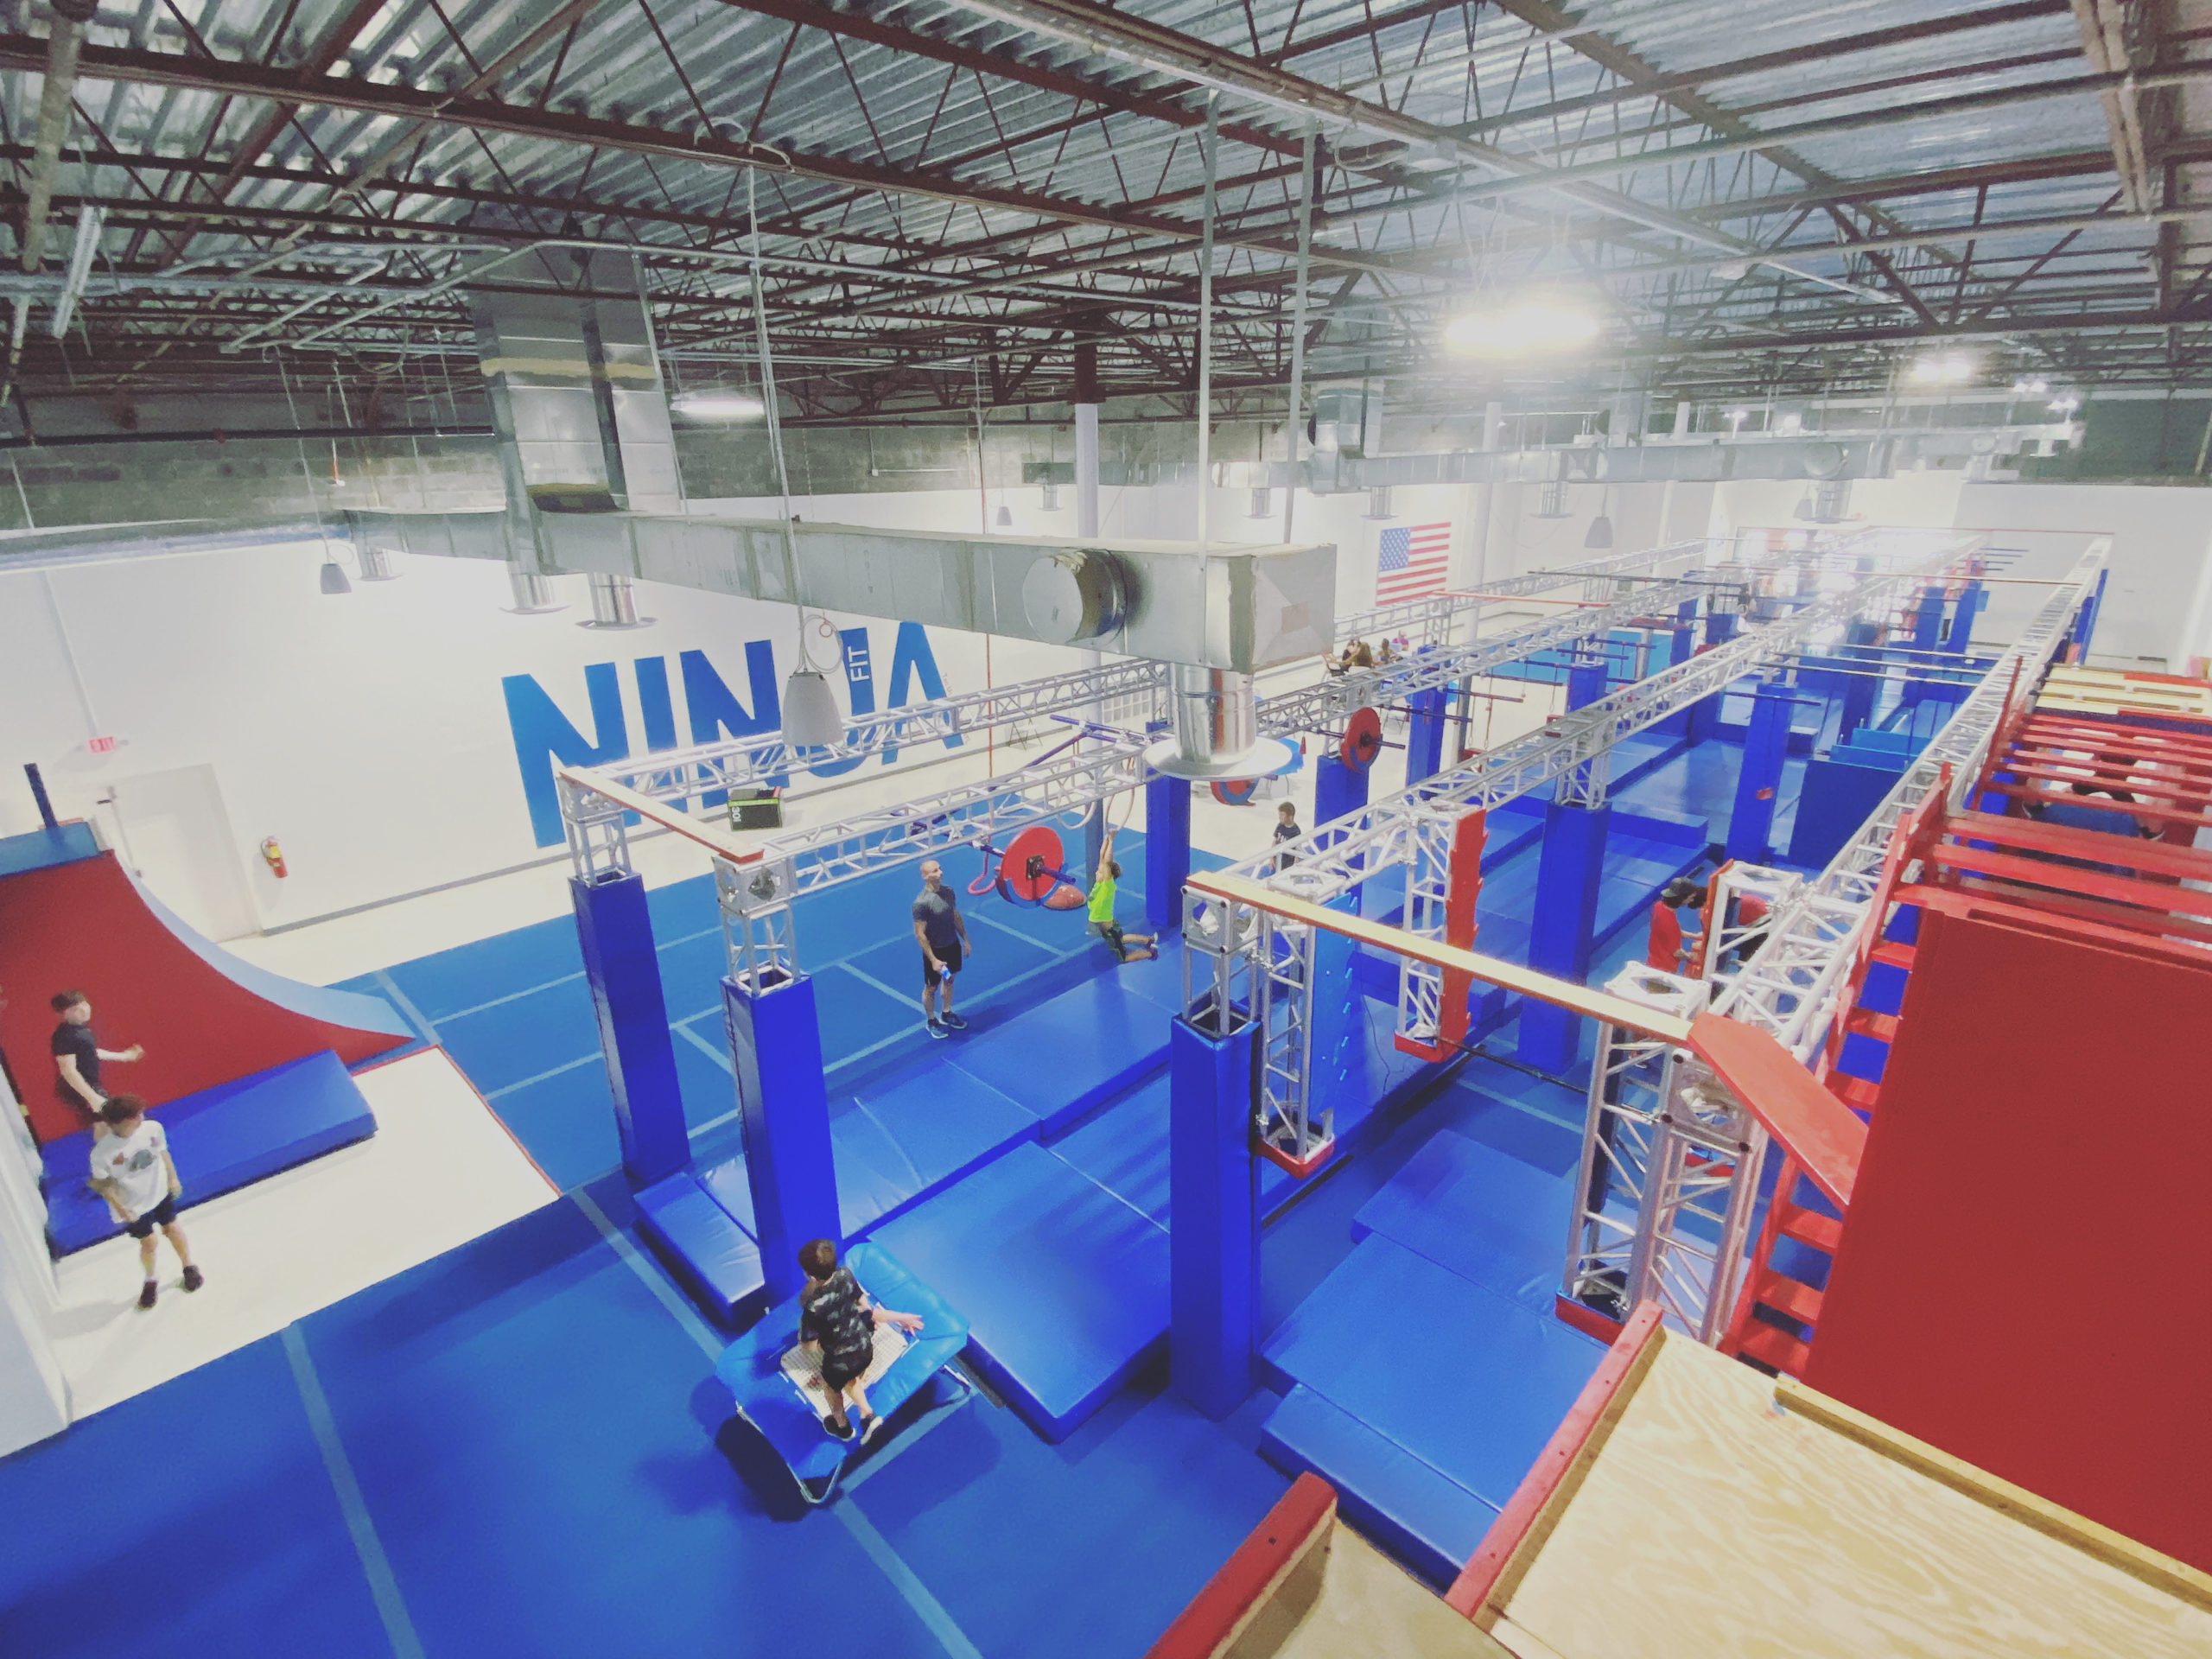 NinjaFit Obstacle Training Facility